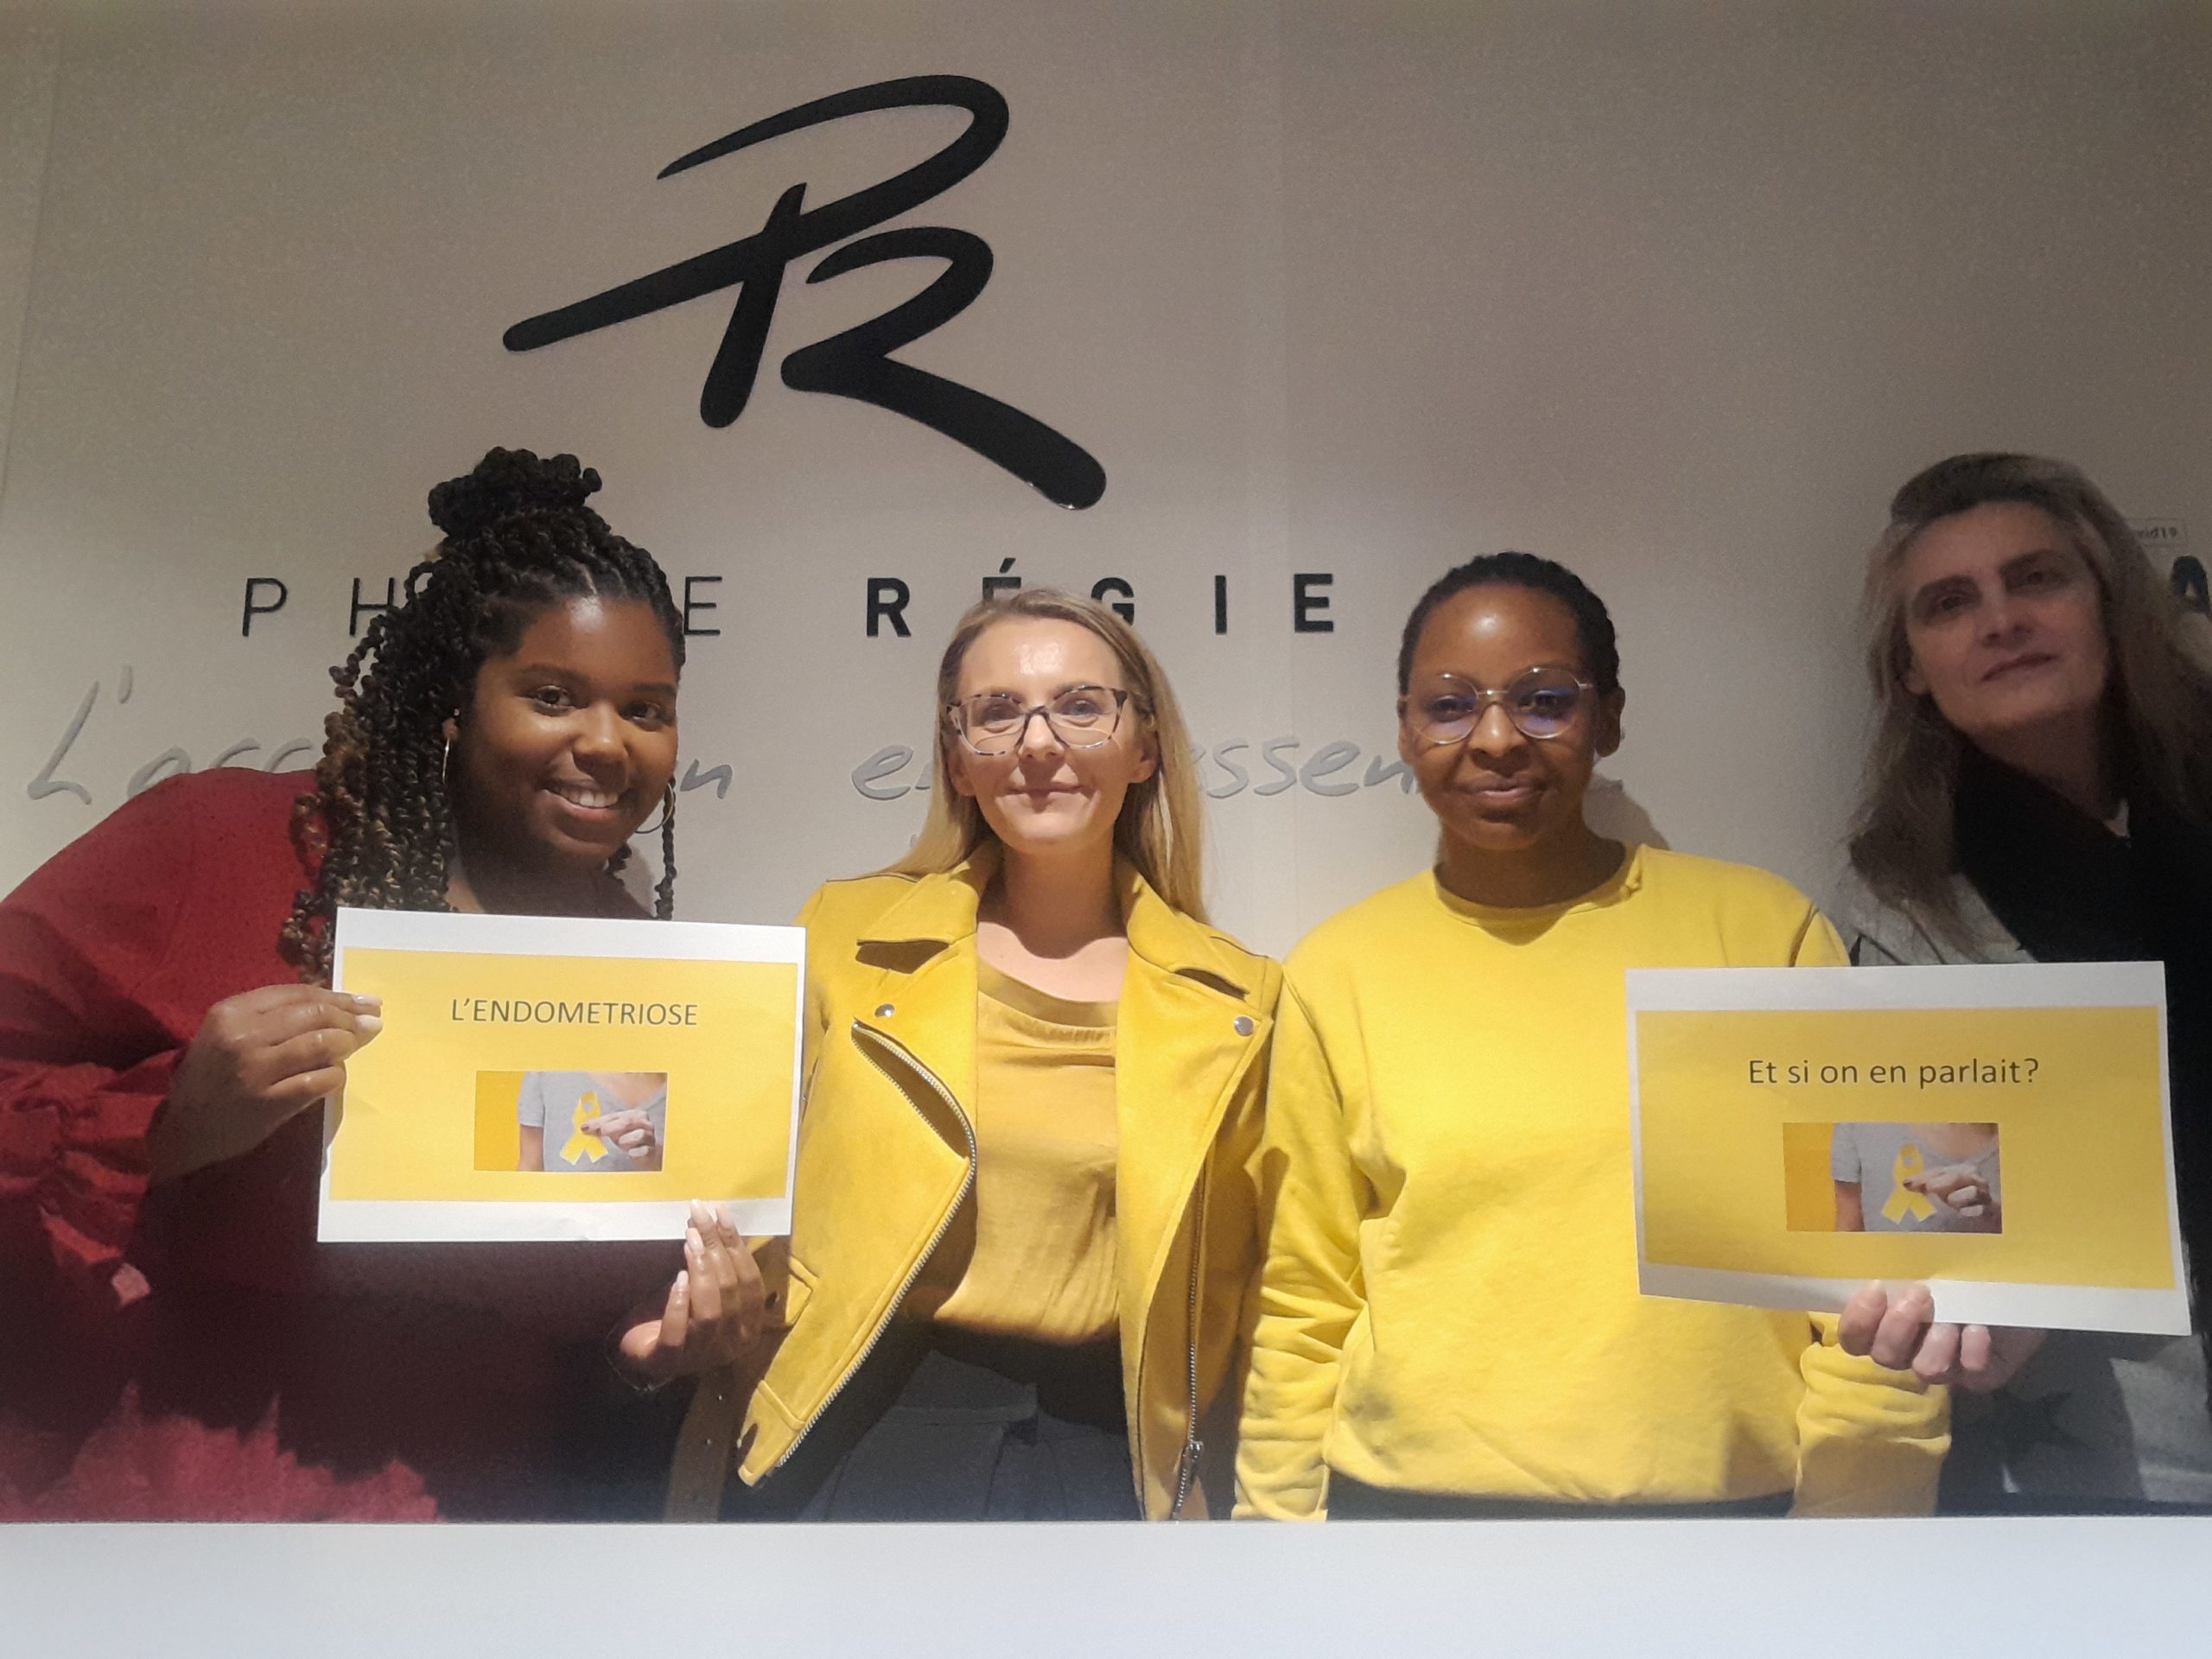 Phone Régie supports World Endometriosis Day